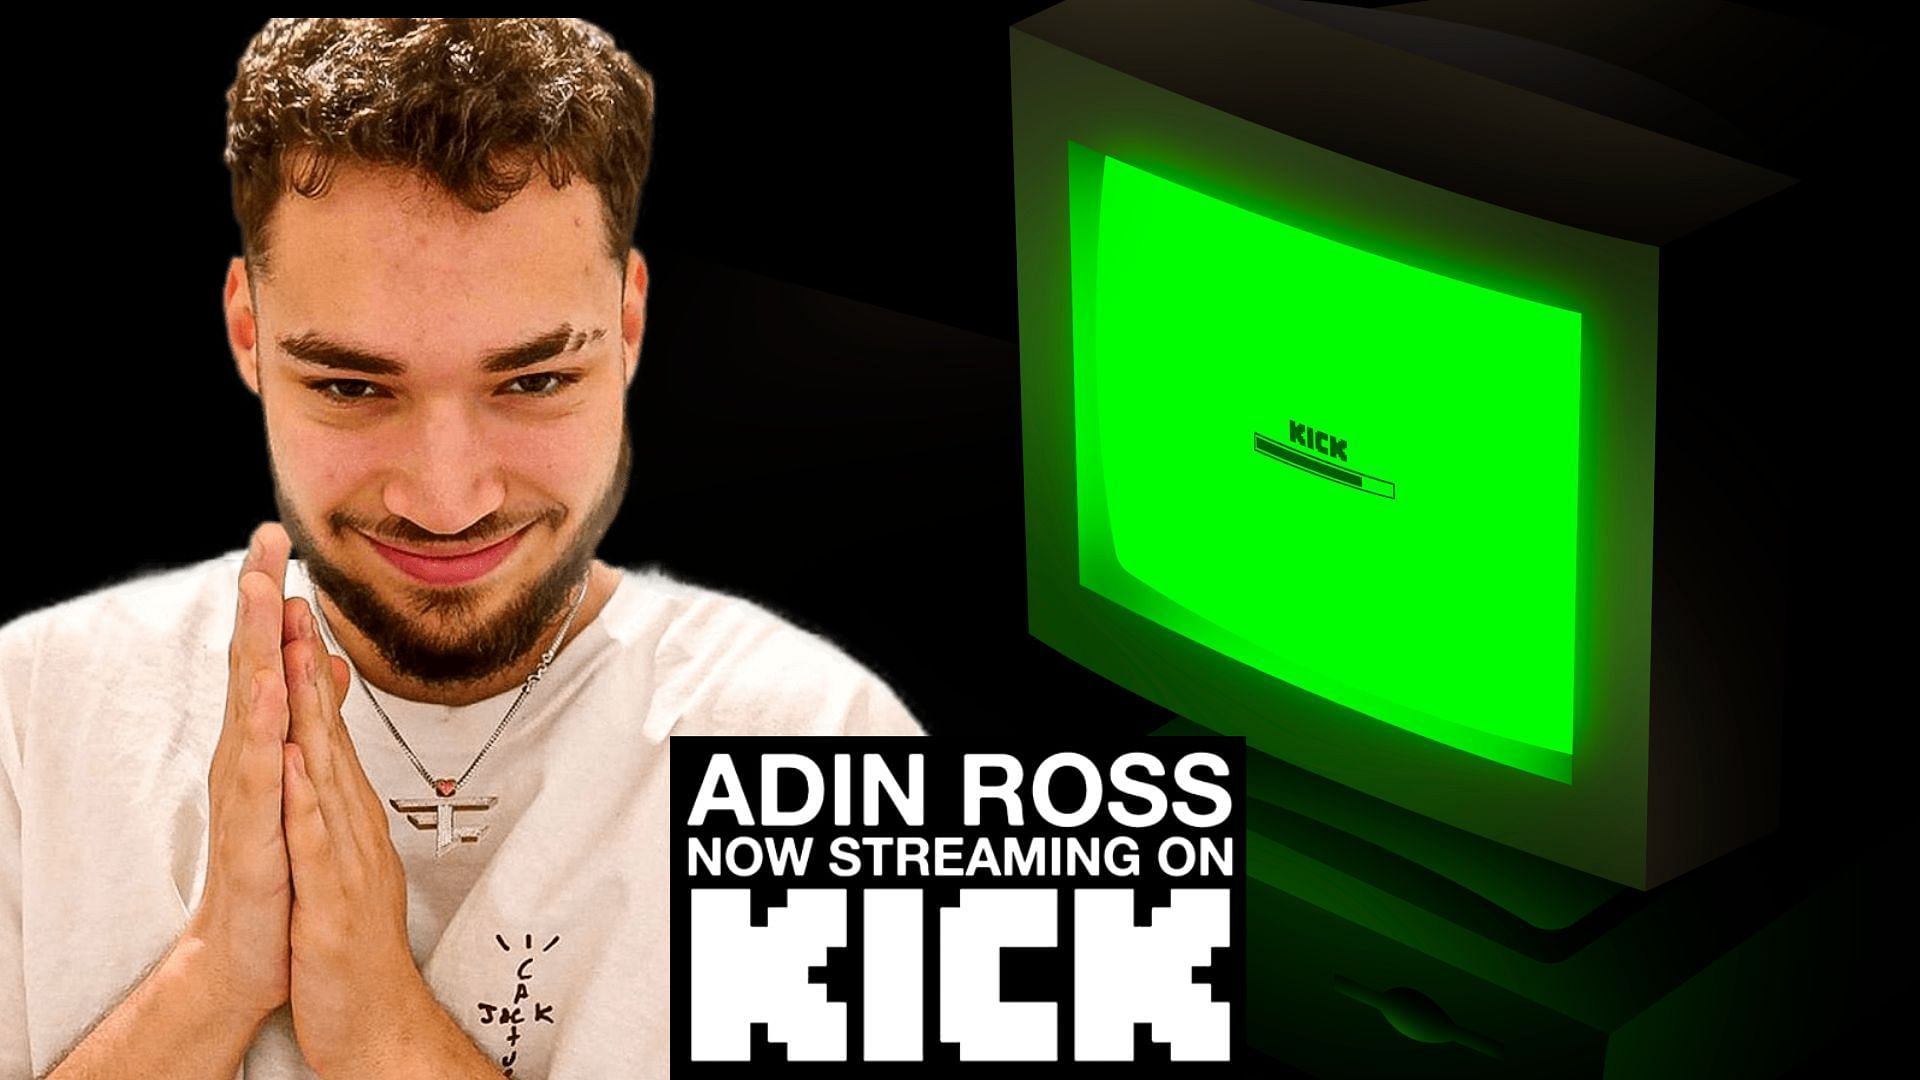 Adin Ross to stream regularly on Kick (Image via Adin Live/YouTube)